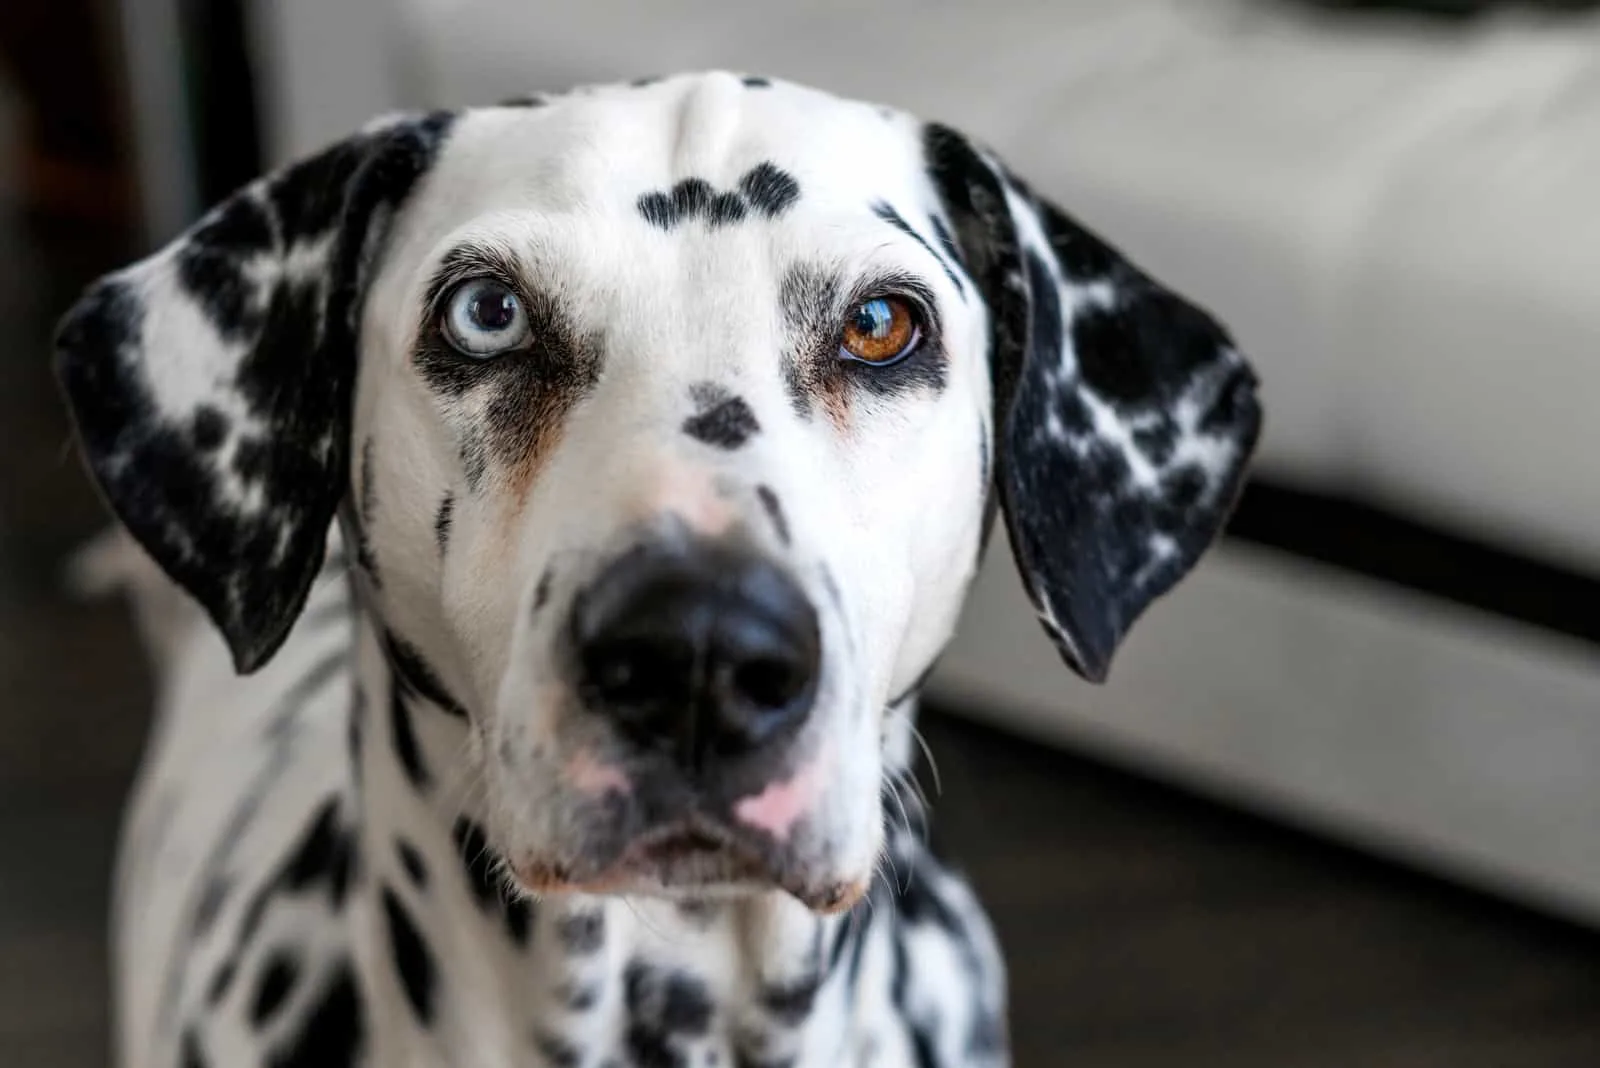 Dalmatian with heterochromia of the eyes